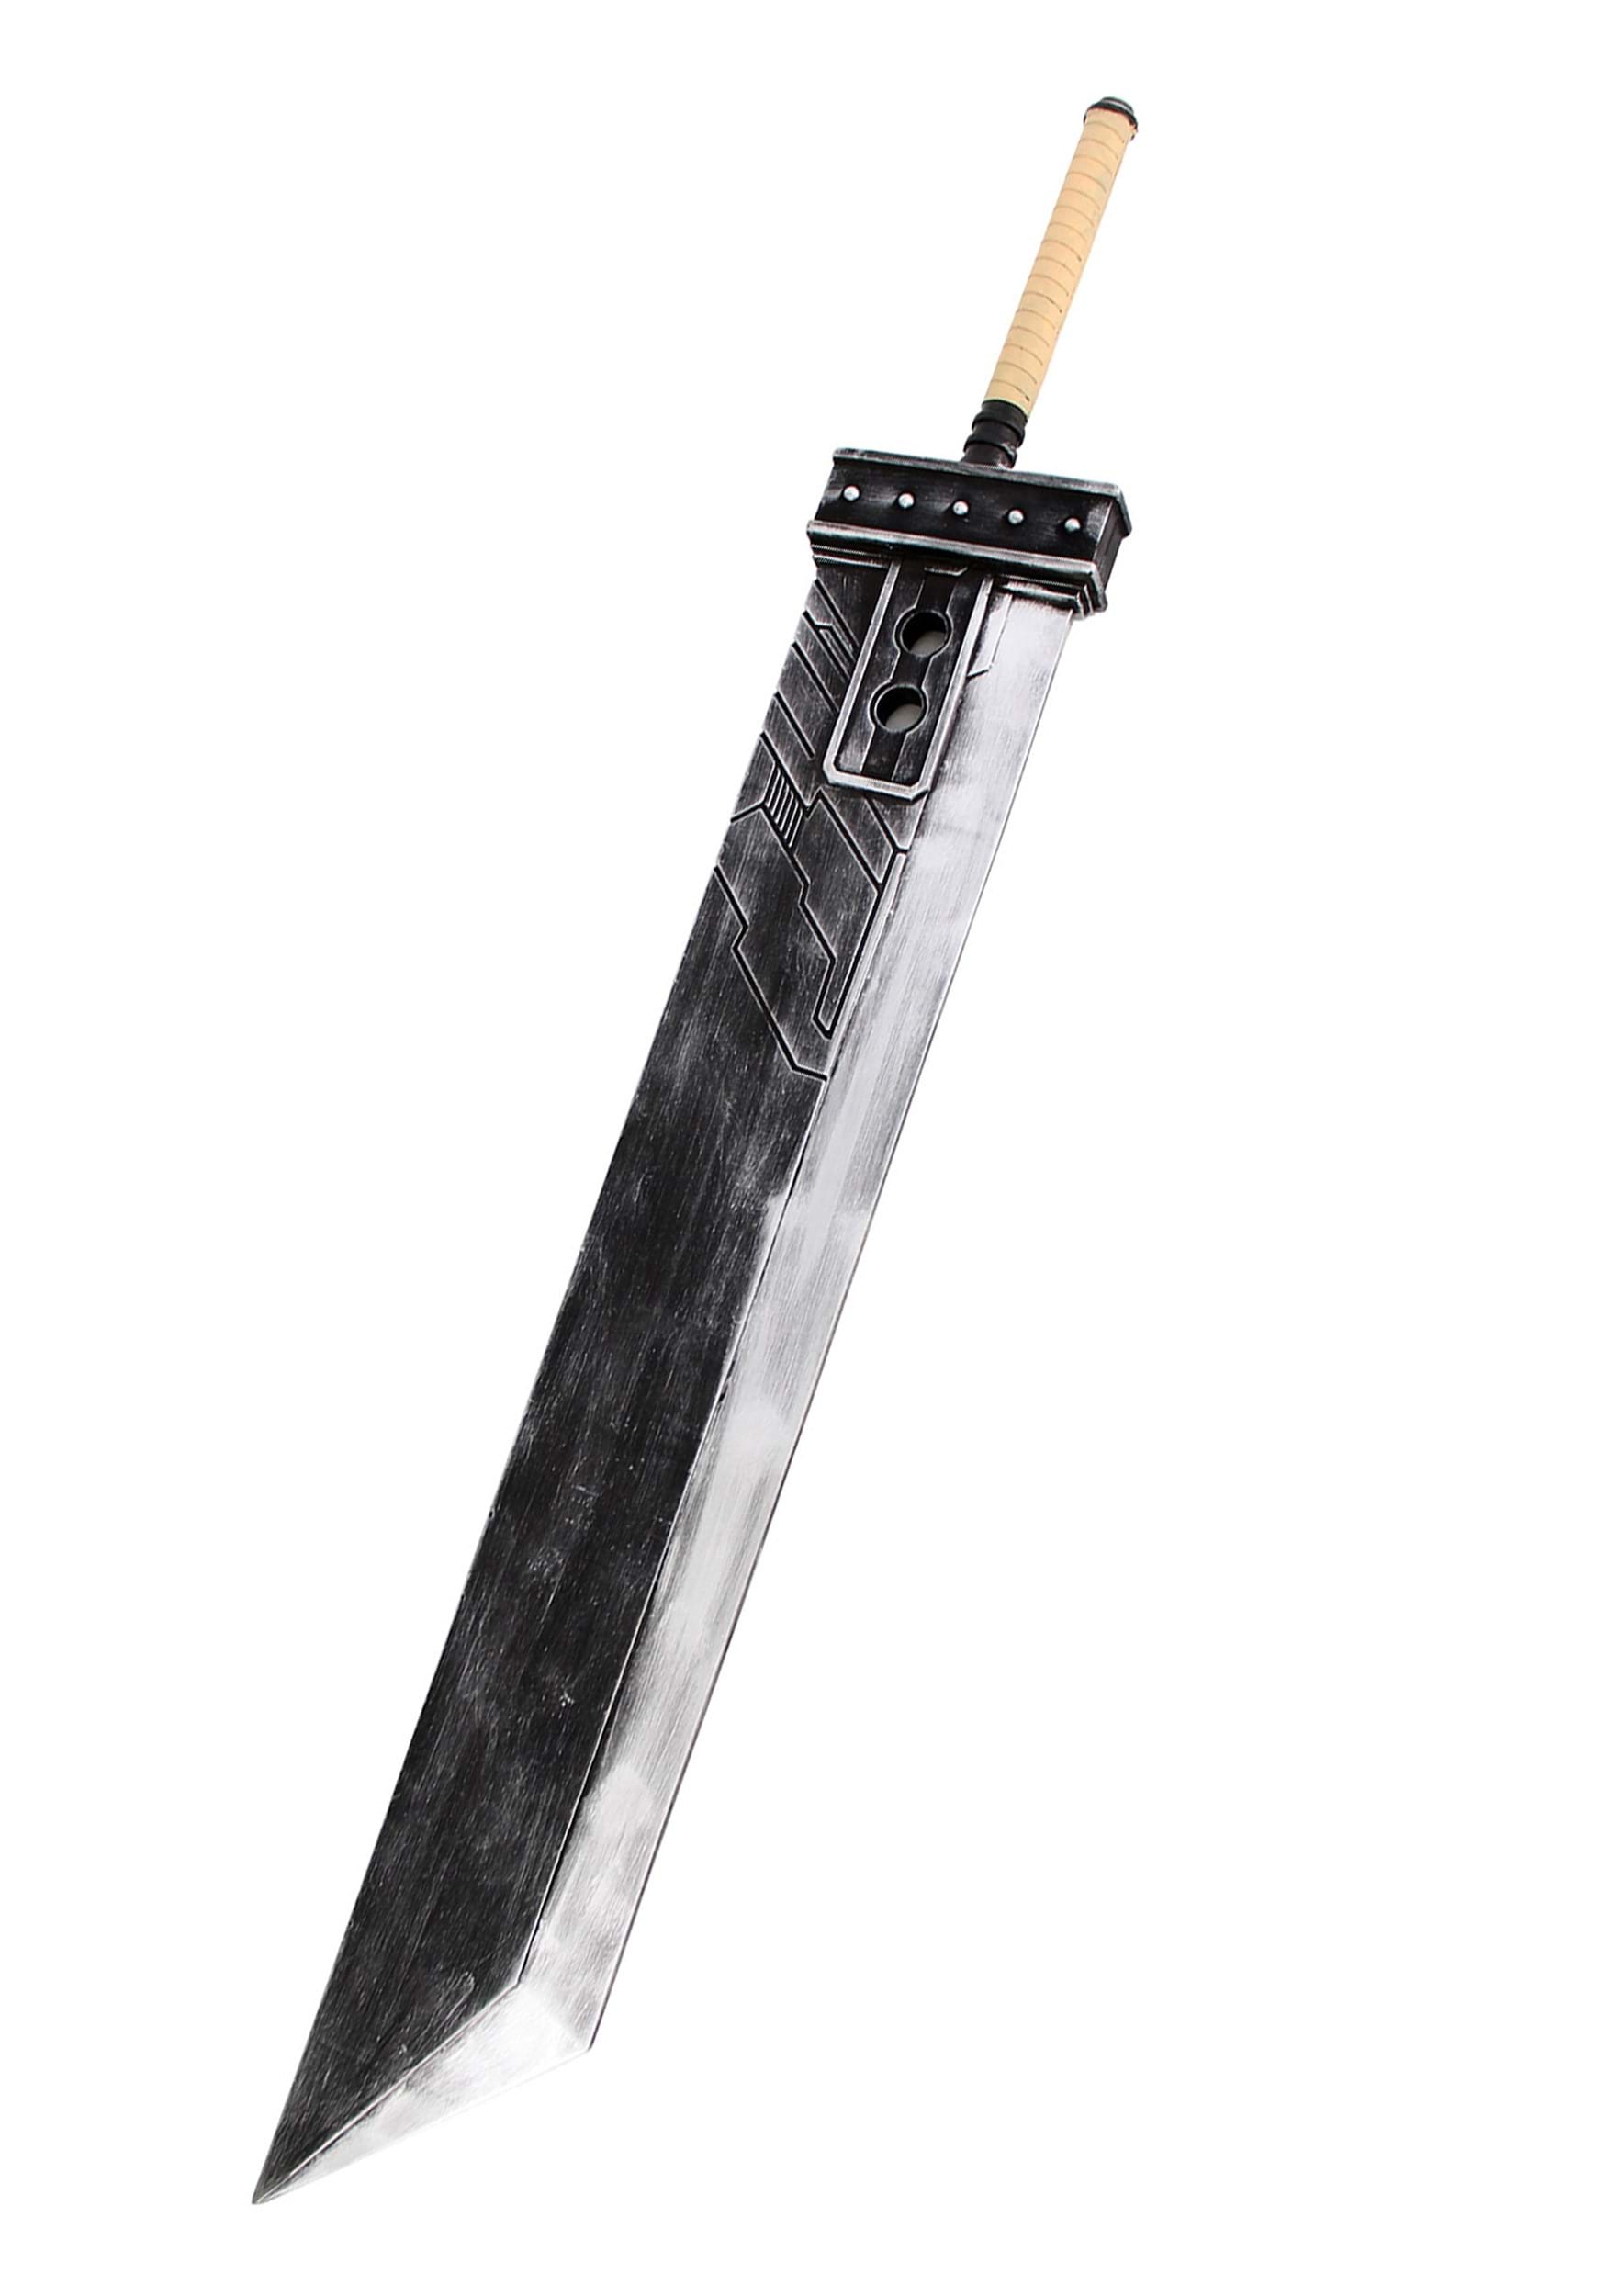 buster sword replica full size